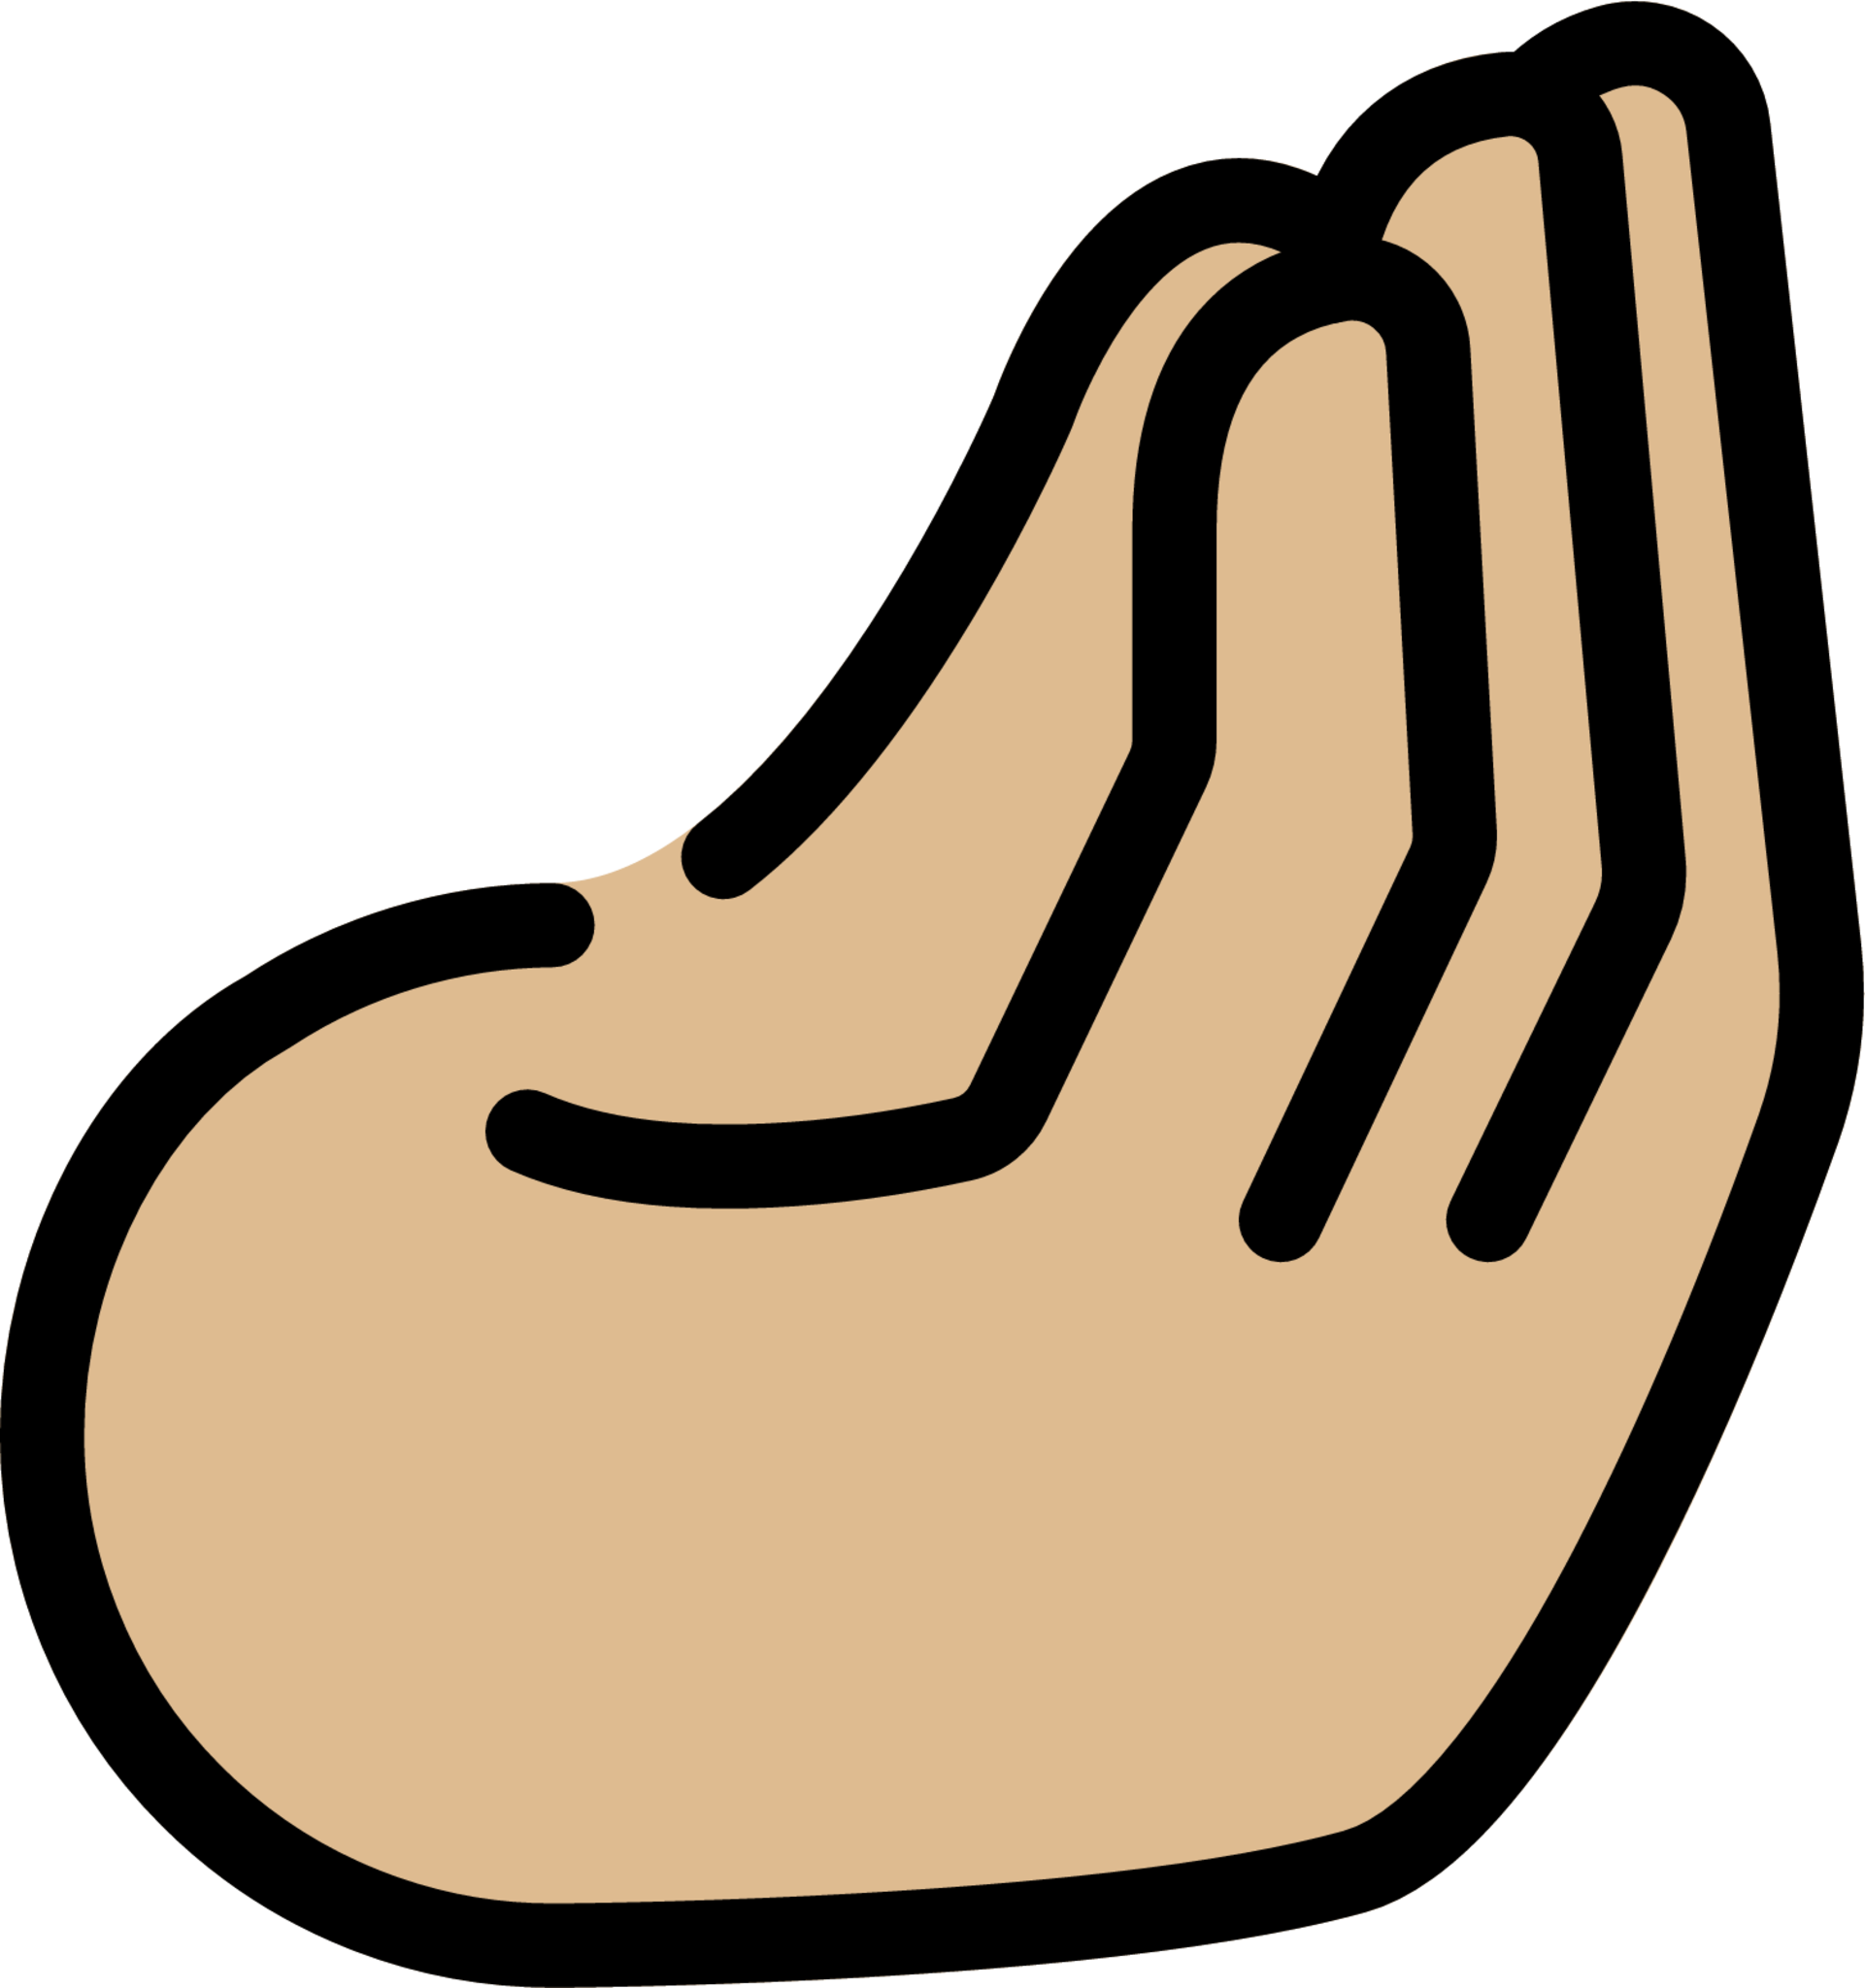 pinched fingers: medium-light skin tone emoji